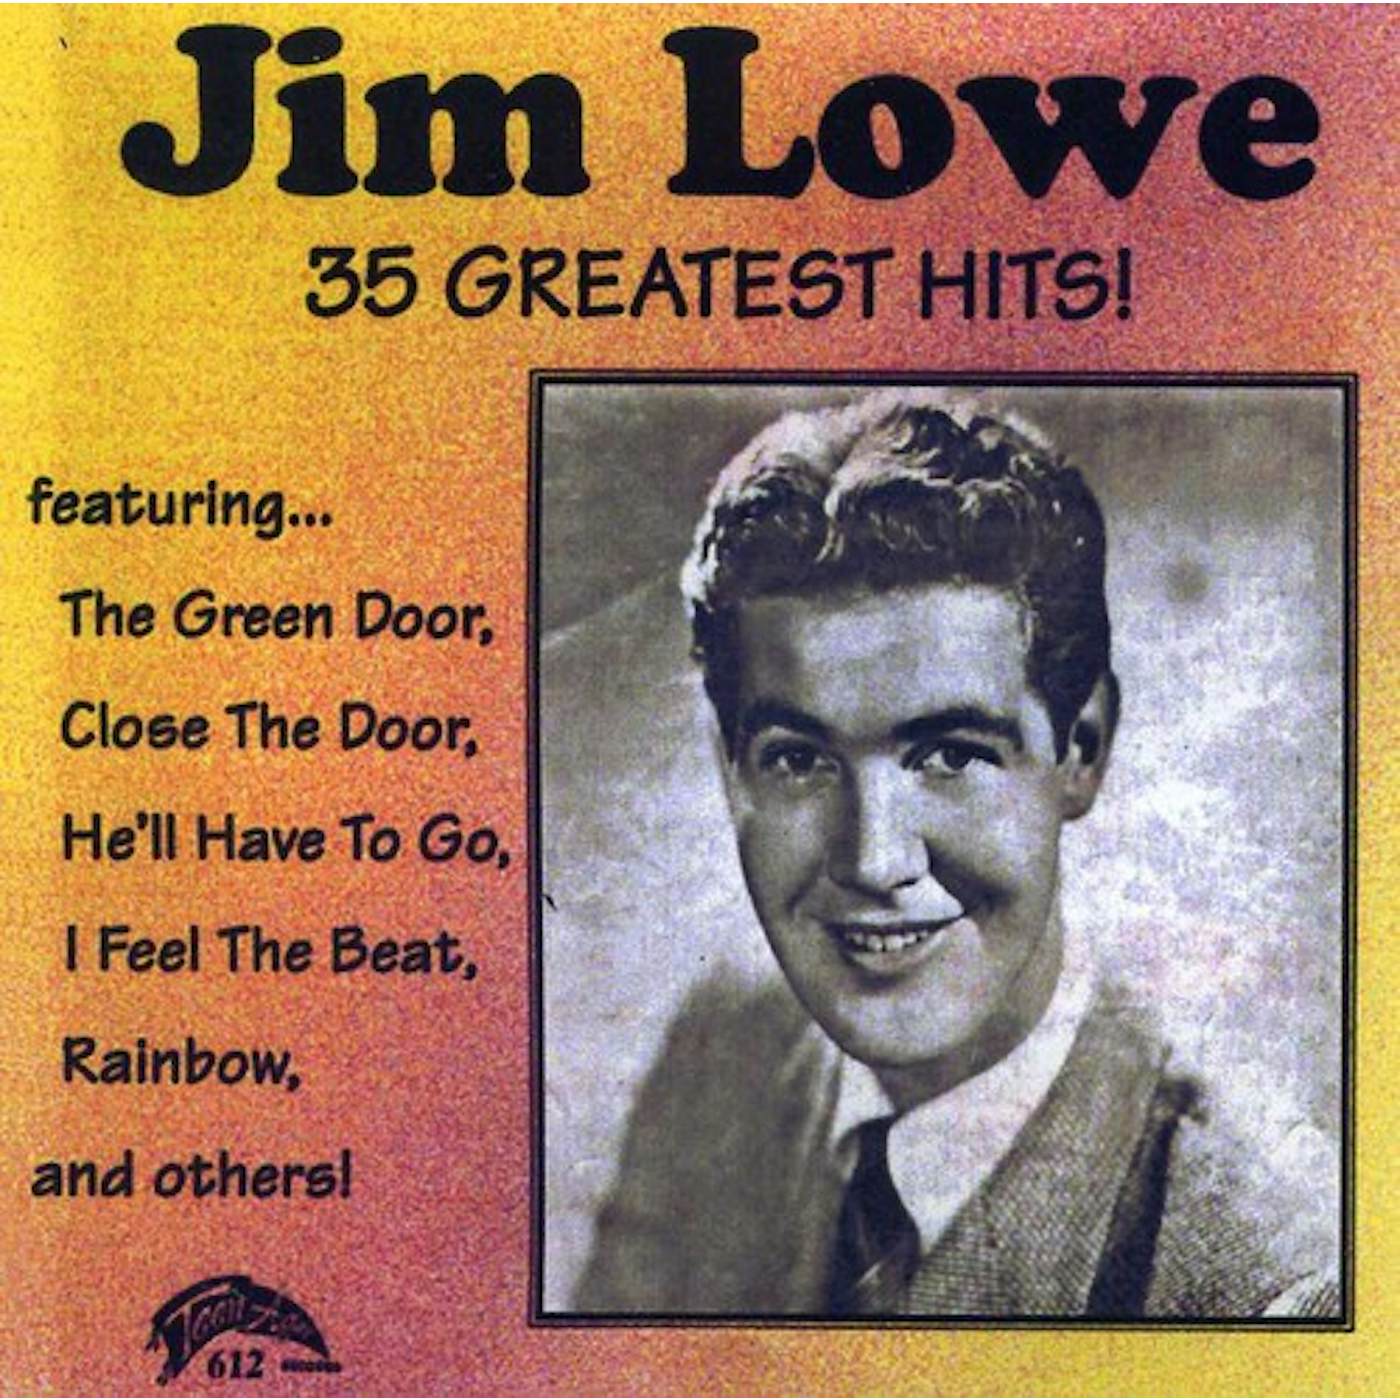 Jim Lowe 35 GREATEST HITS CD